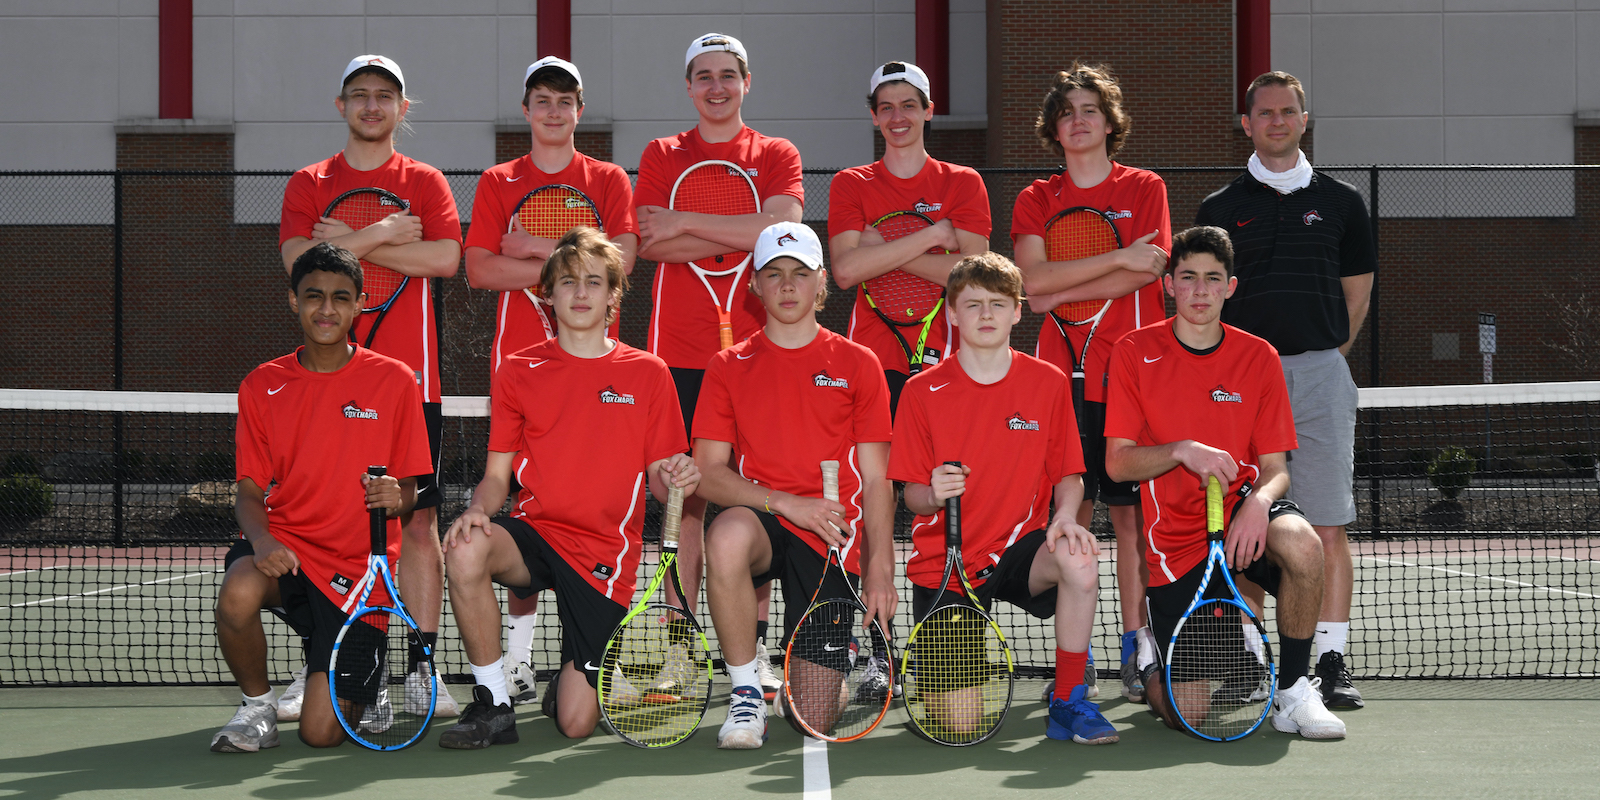 Boys' tennis team